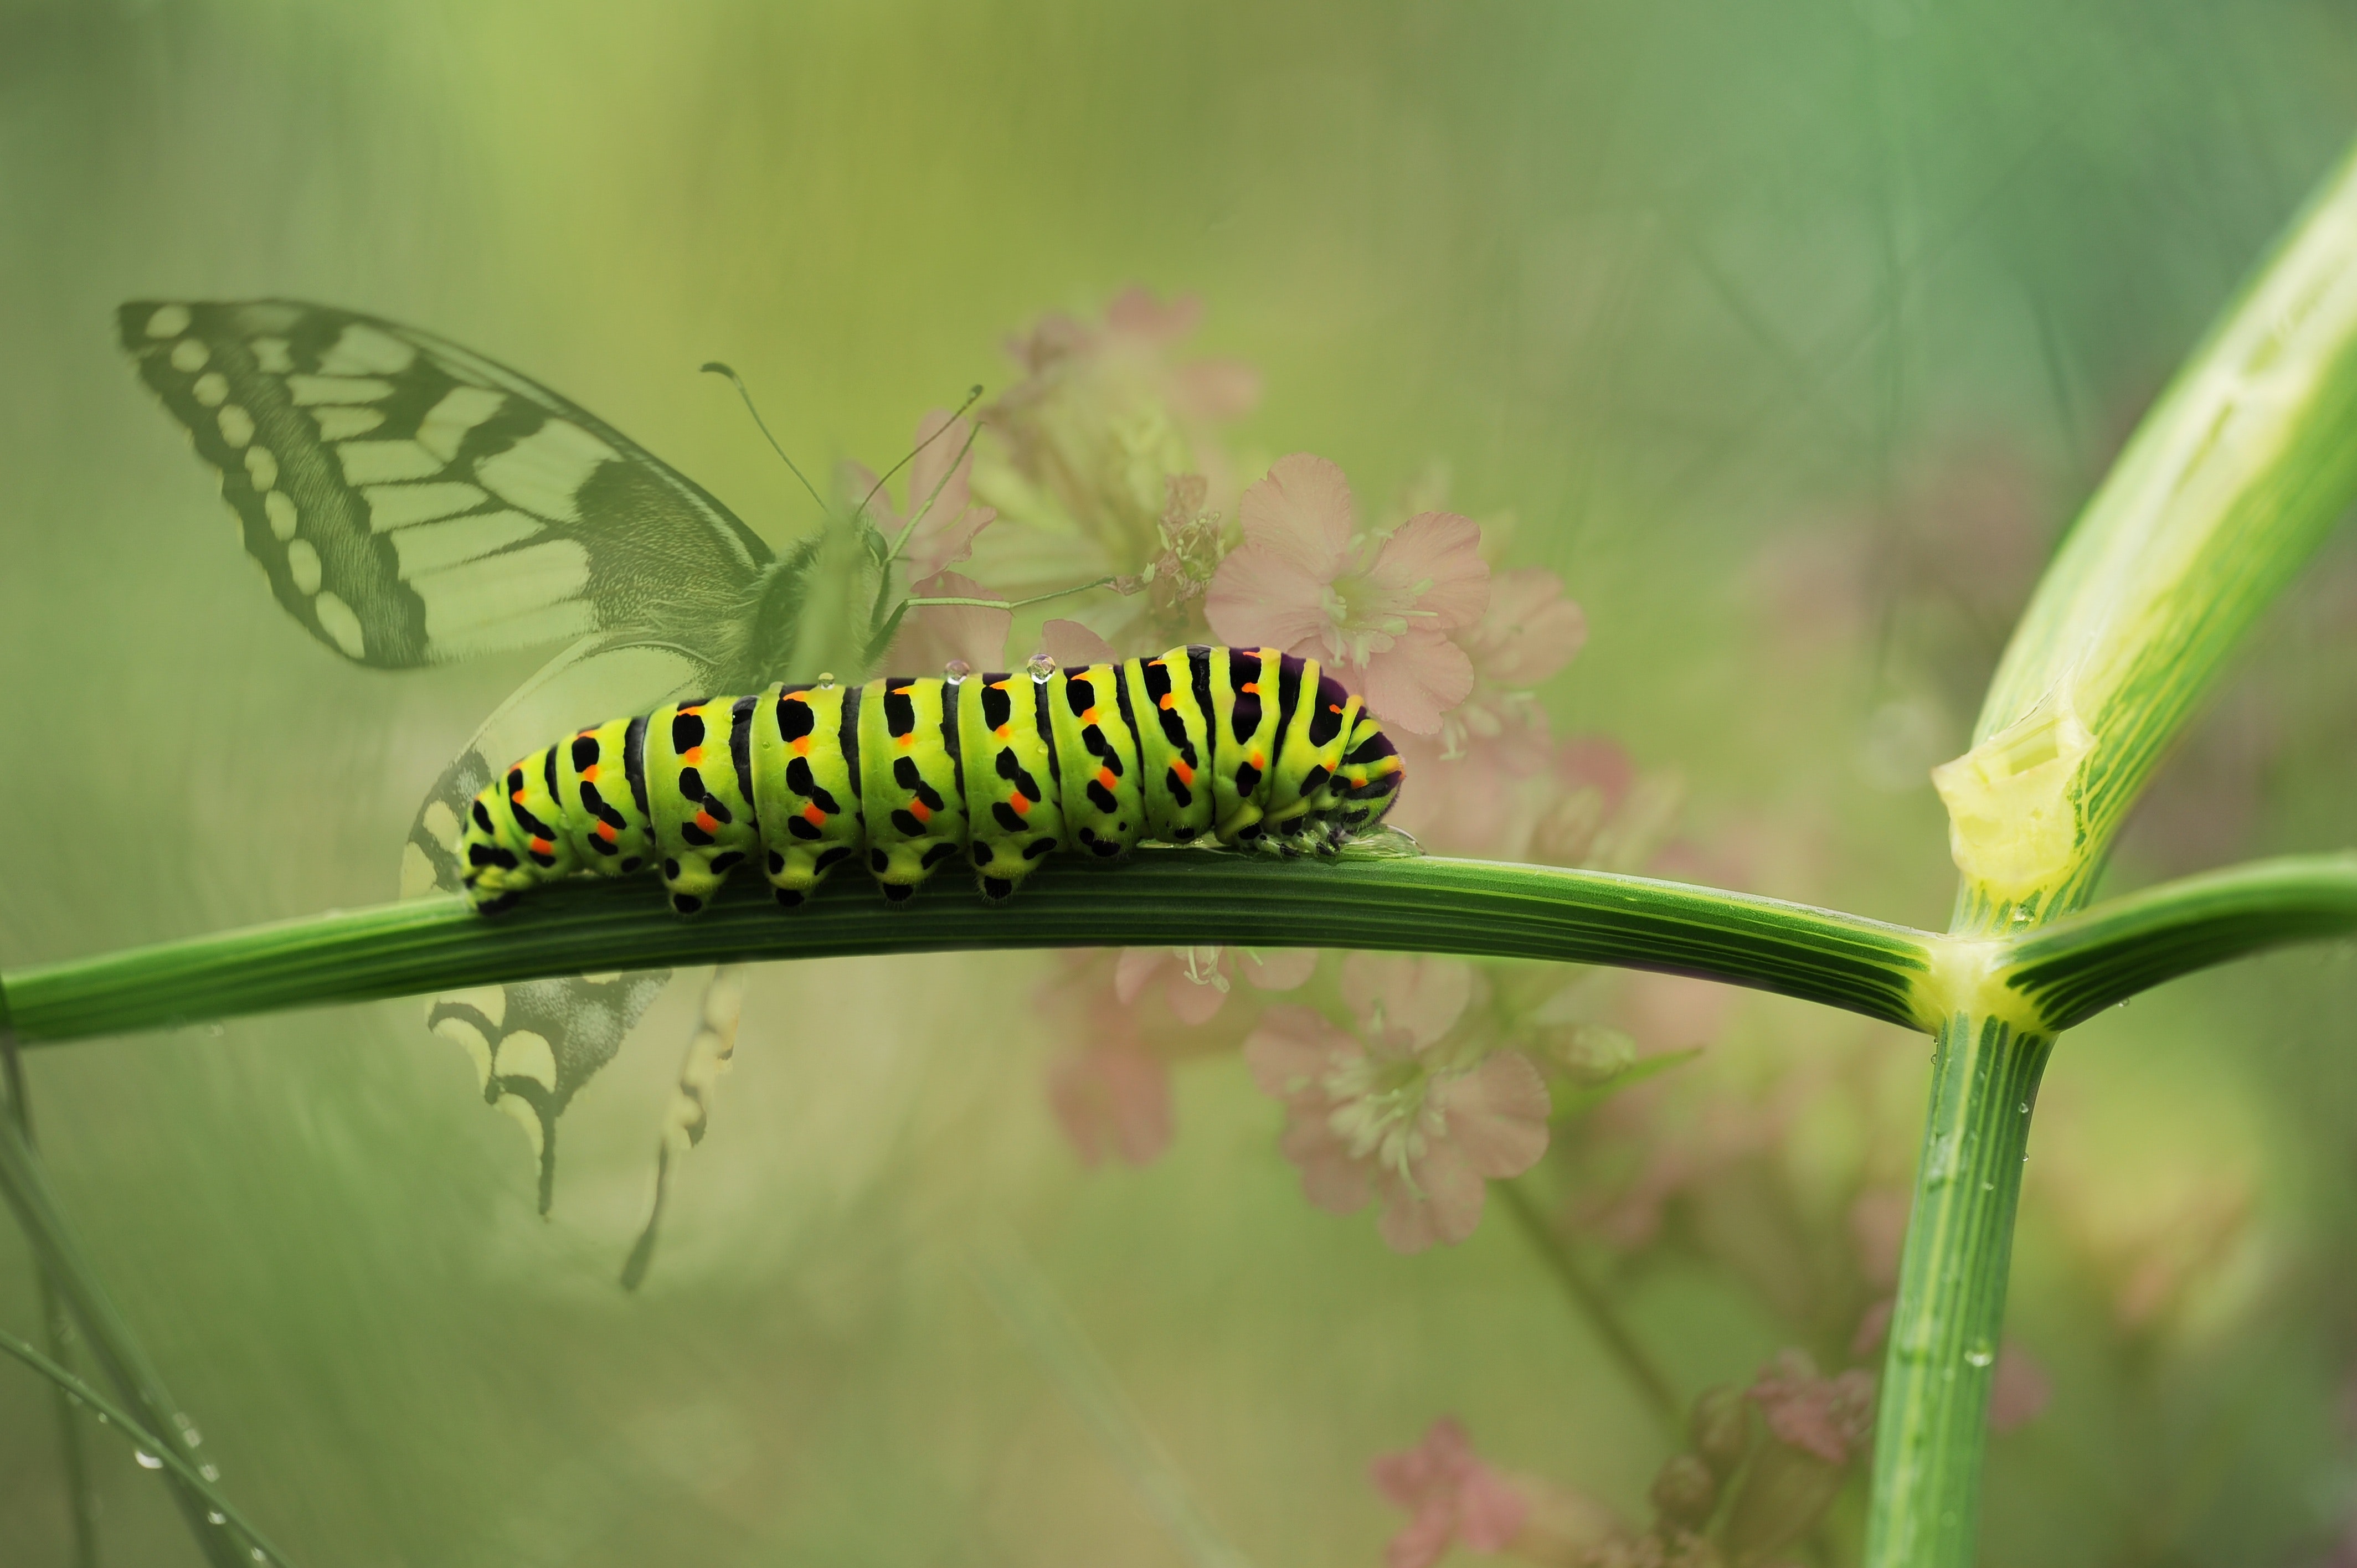 Green caterpillar on green plant stem photo